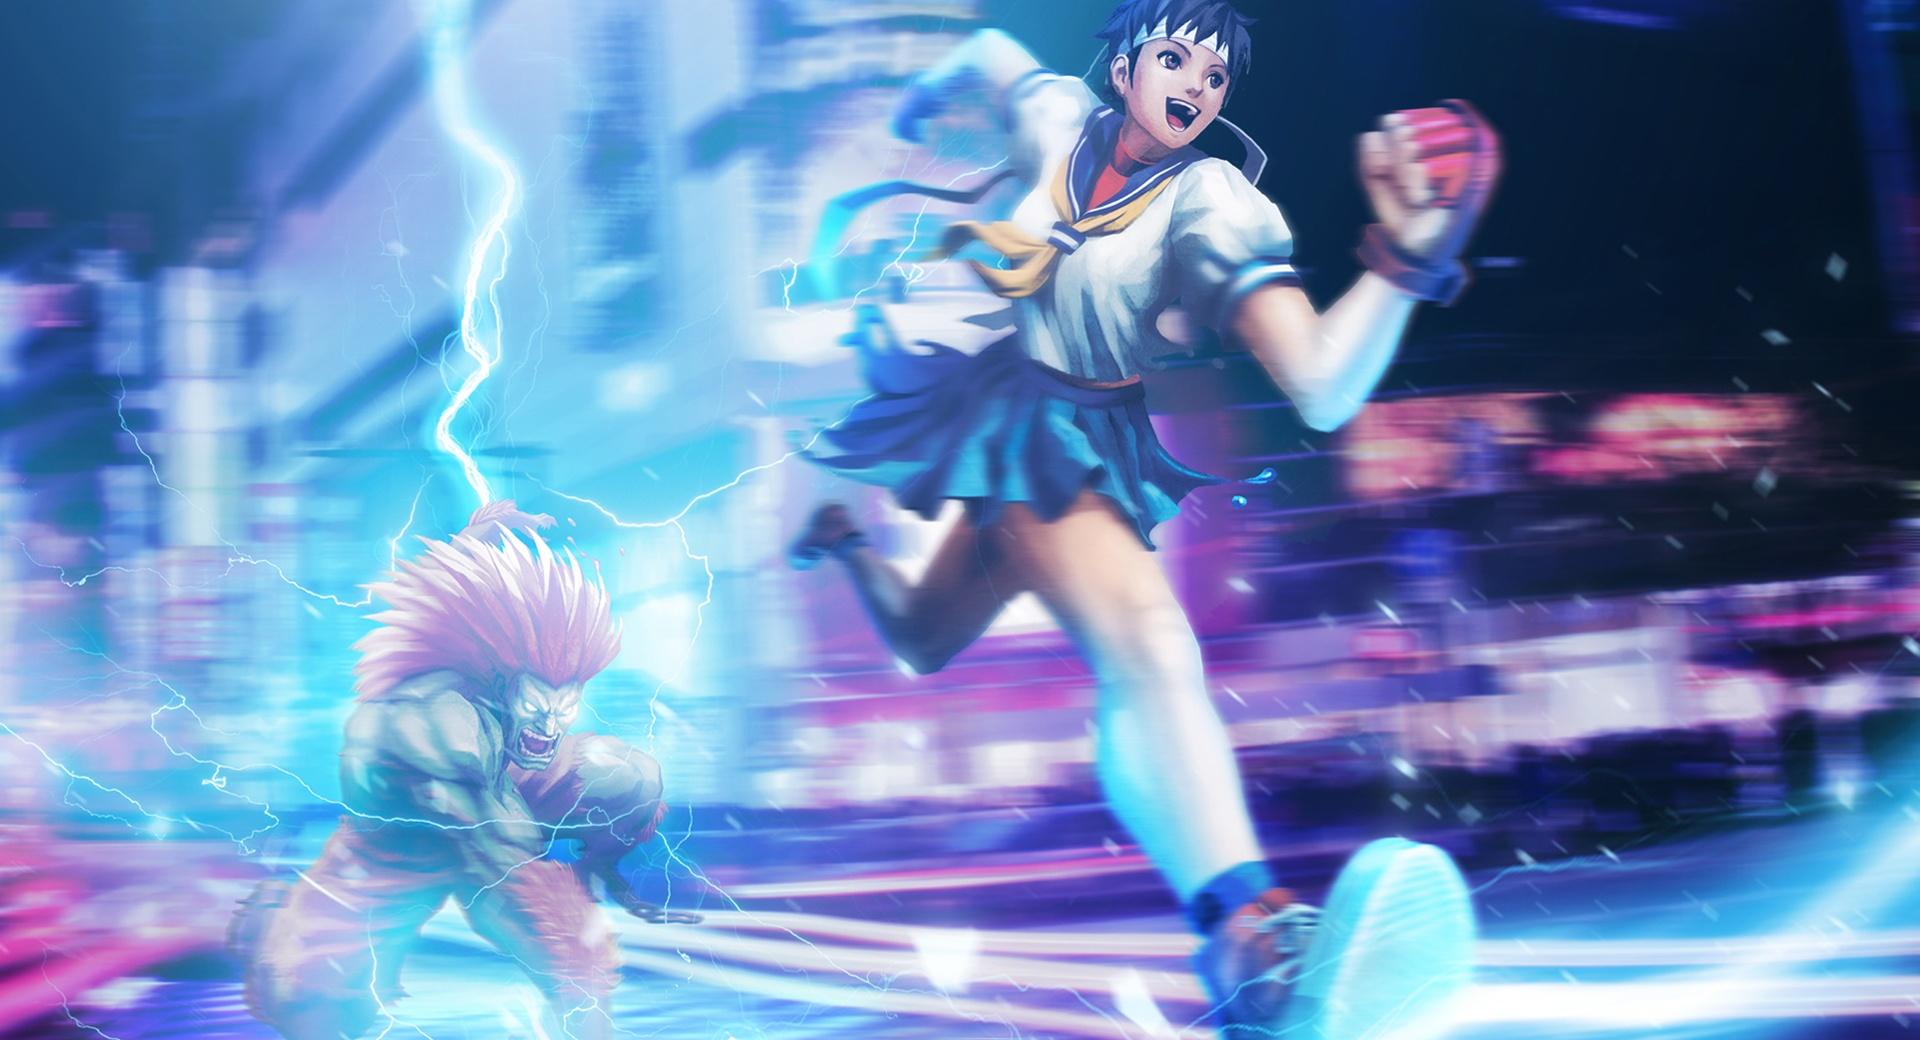 Street Fighter X Tekken - Sakura Blanka at 1280 x 960 size wallpapers HD quality